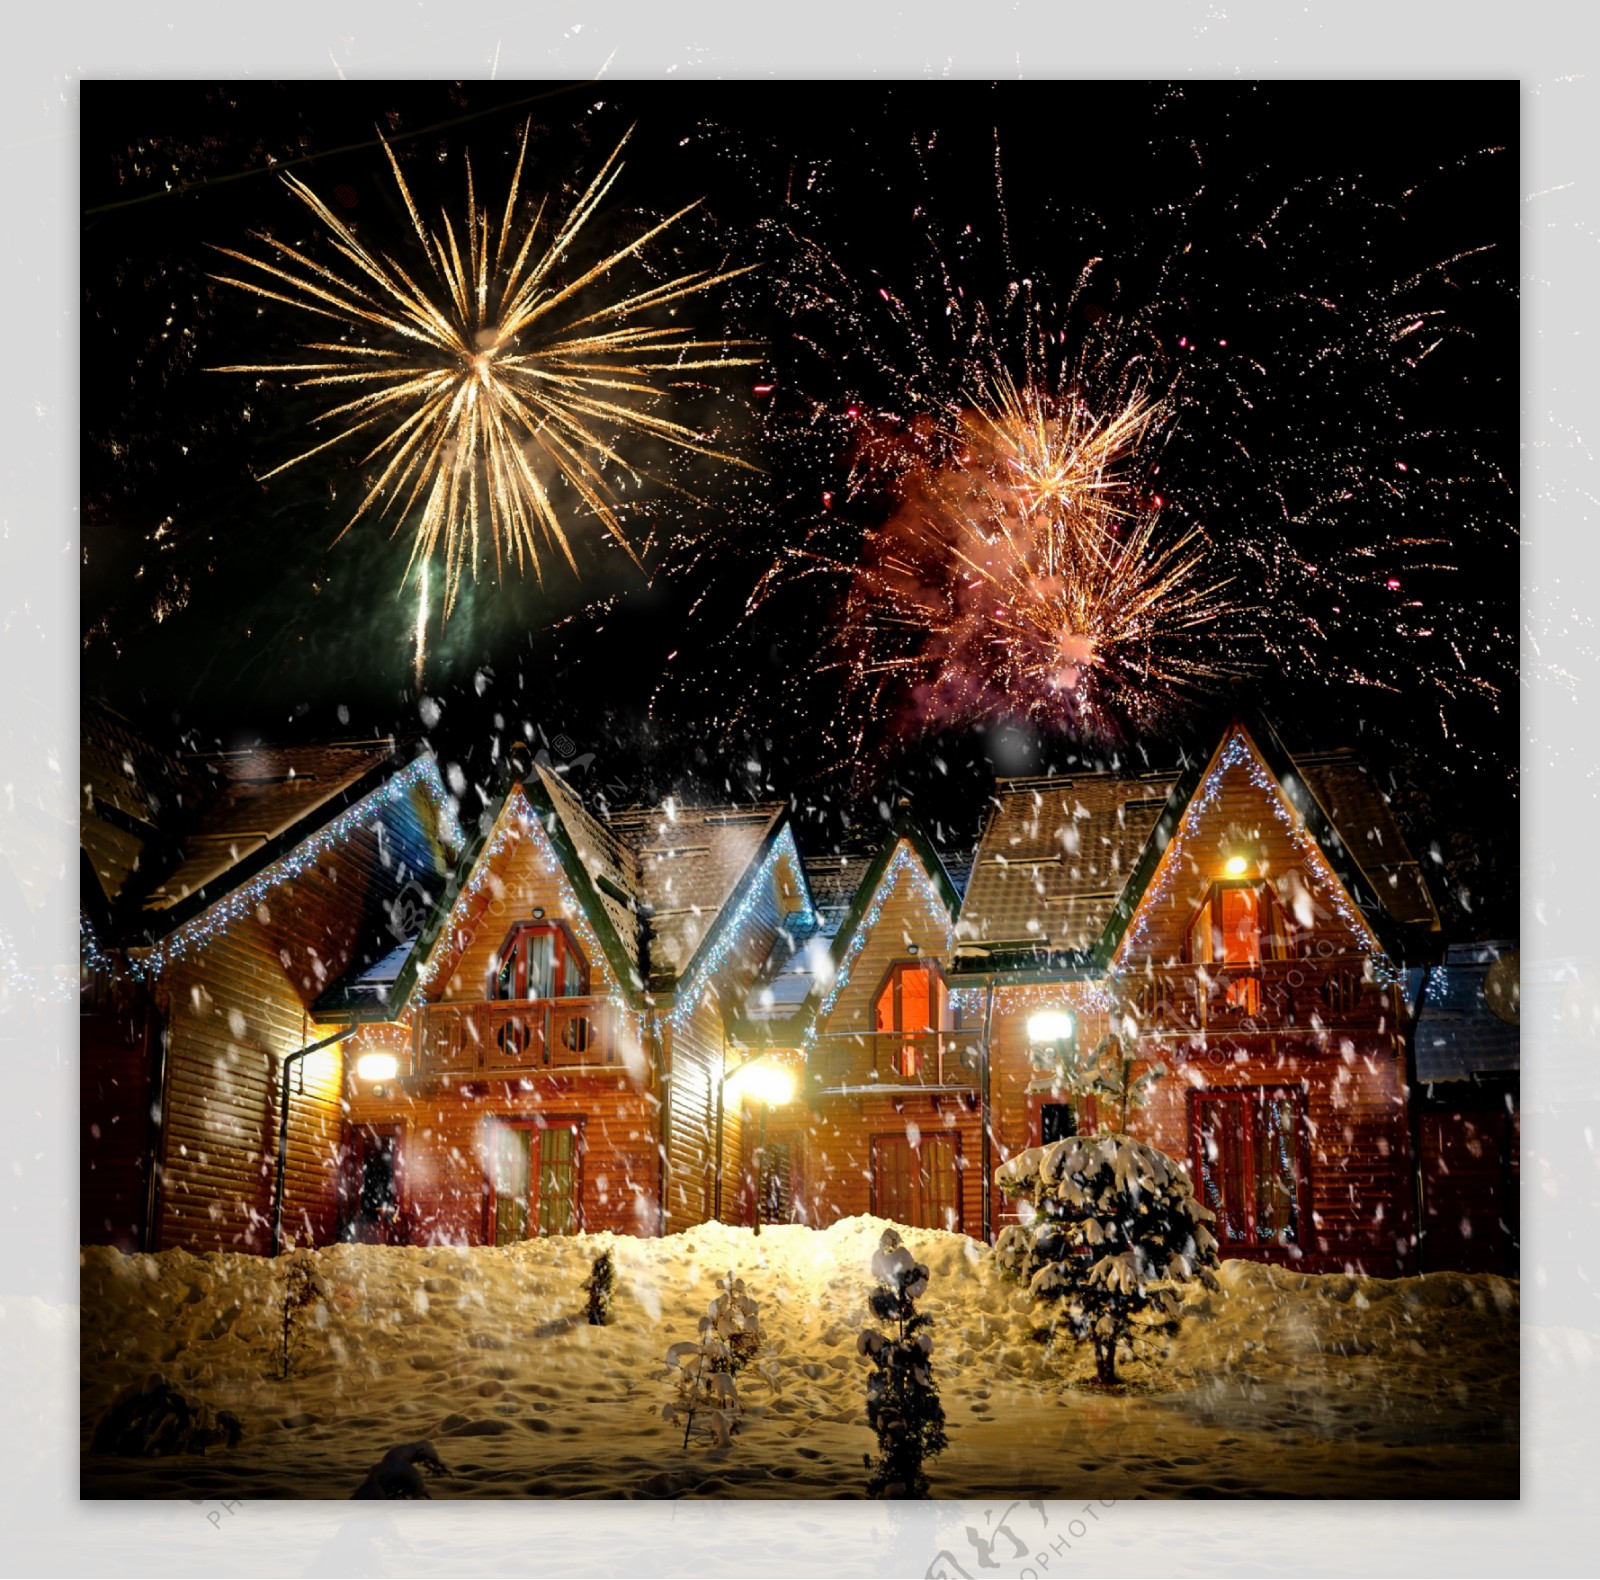 Snowy Christmas Night Wallpapers - Top Free Snowy Christmas Night ...